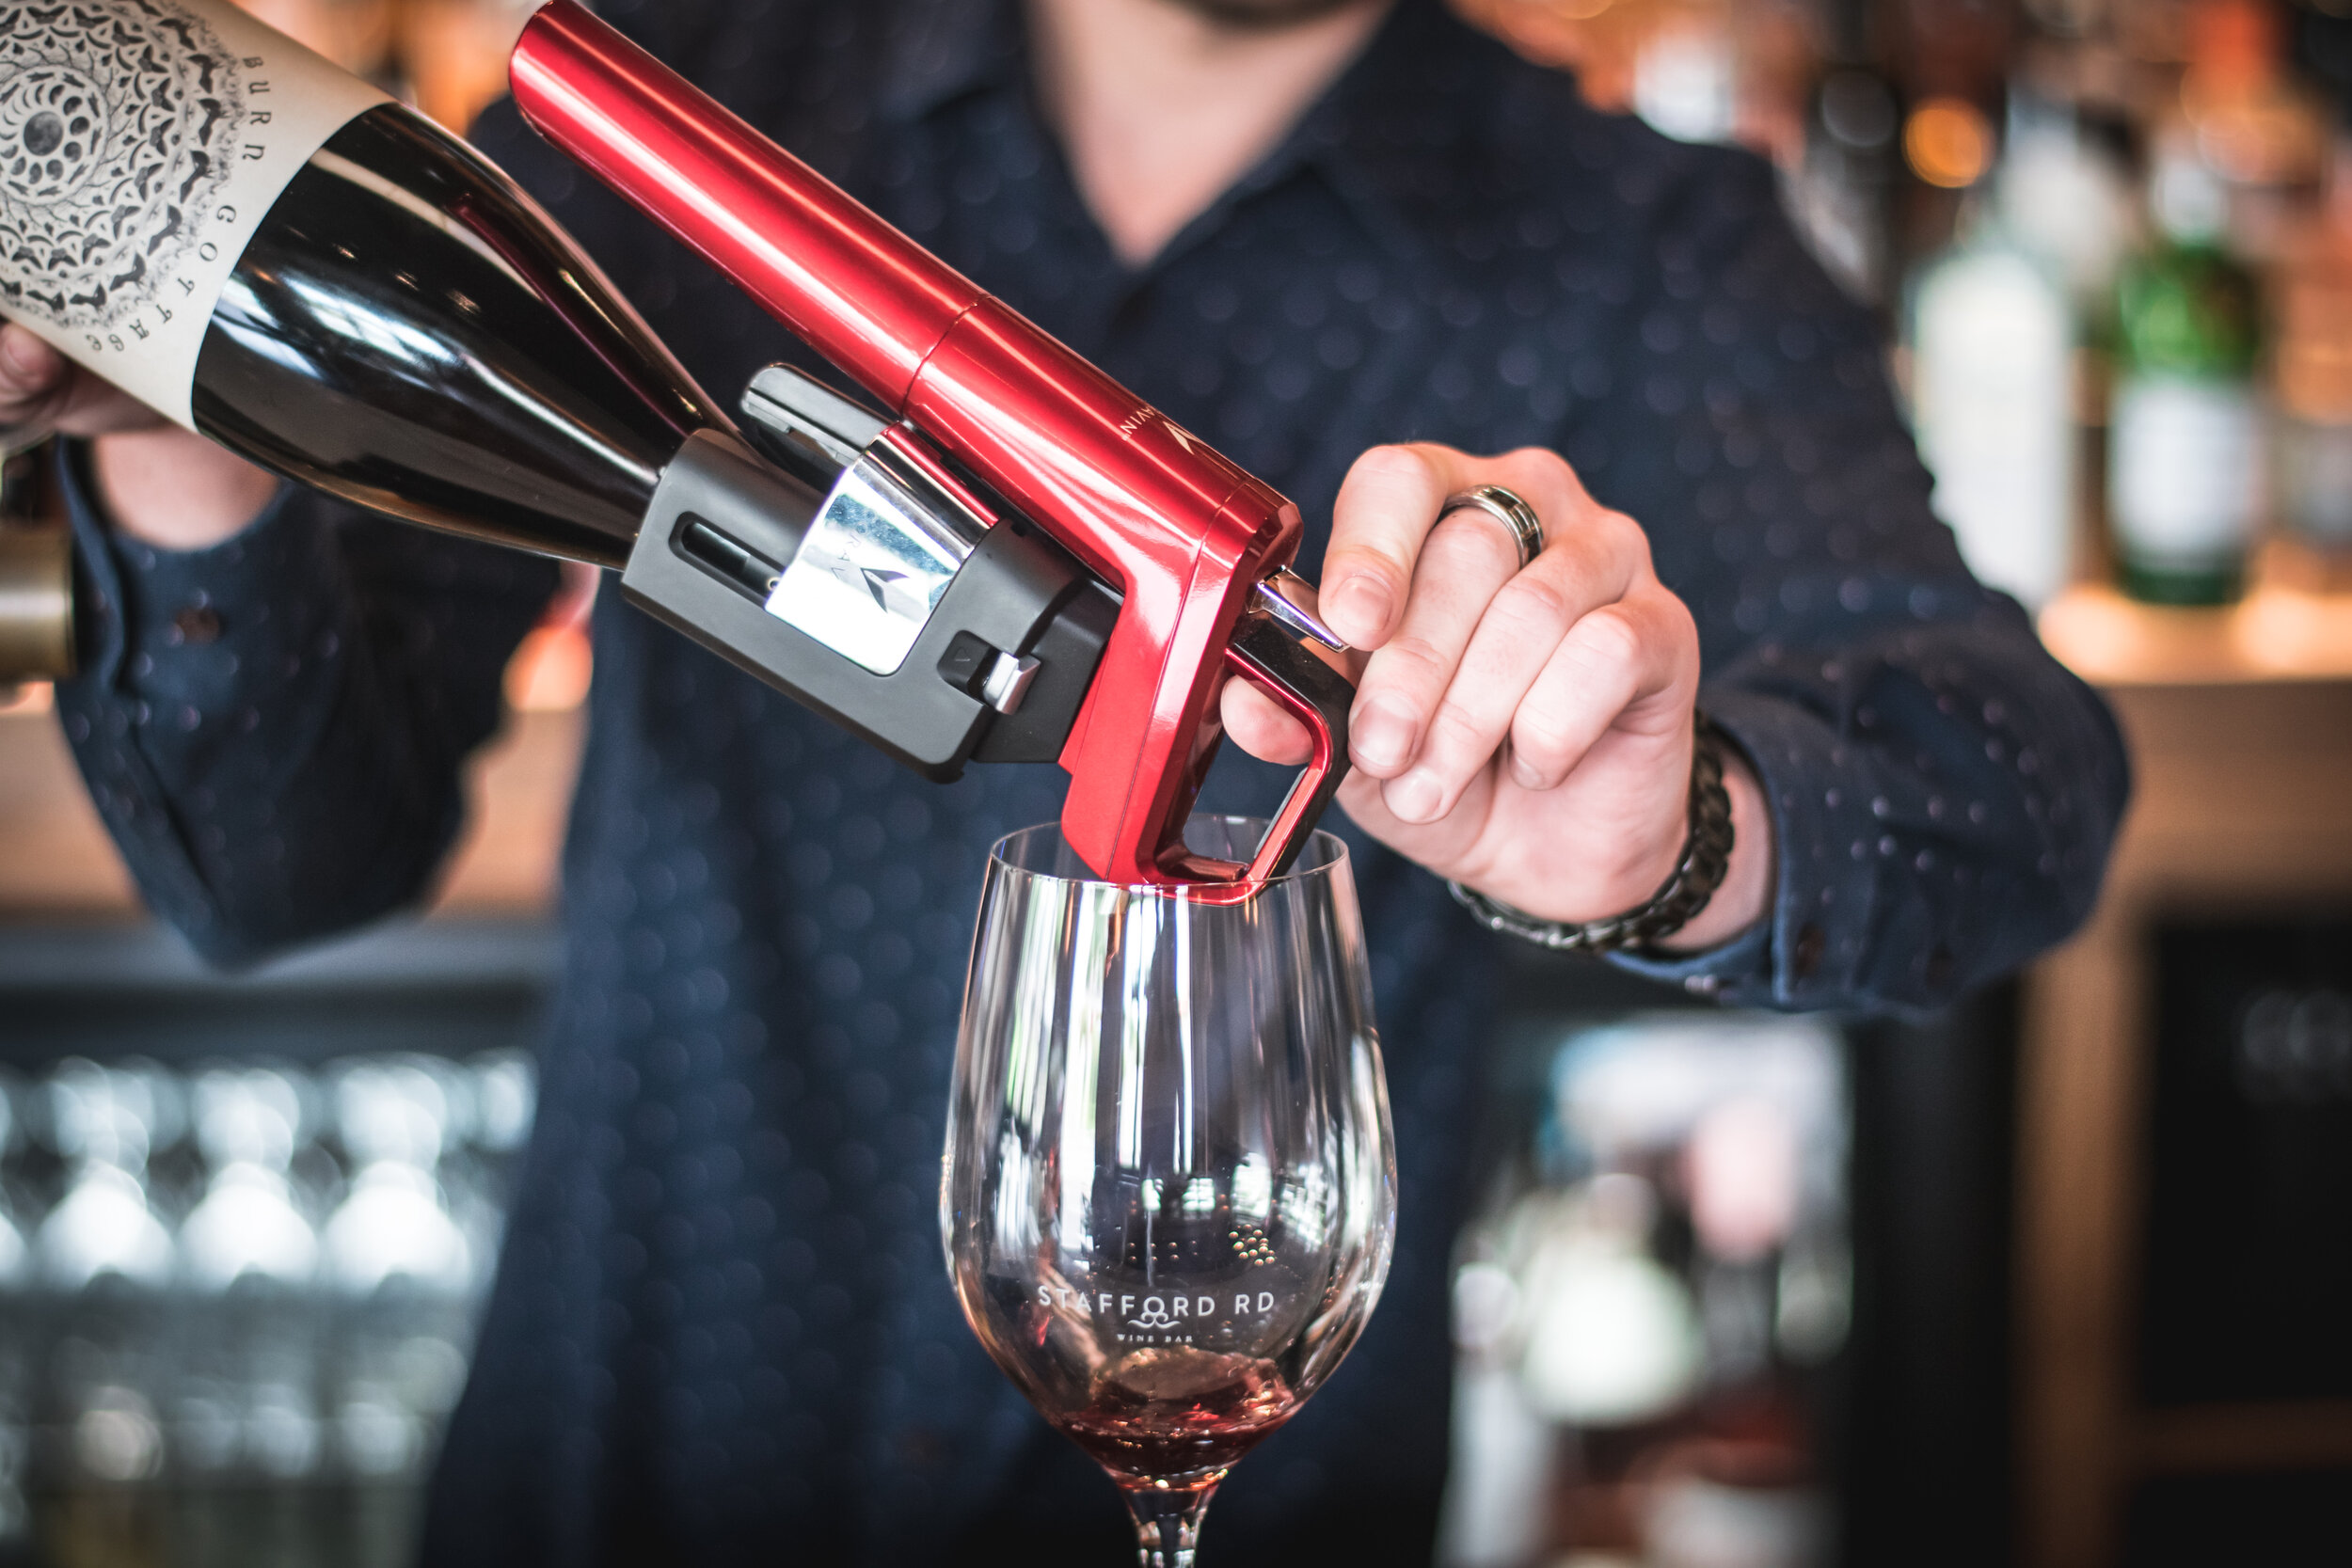 Drinks — Stafford Rd Wine Bar